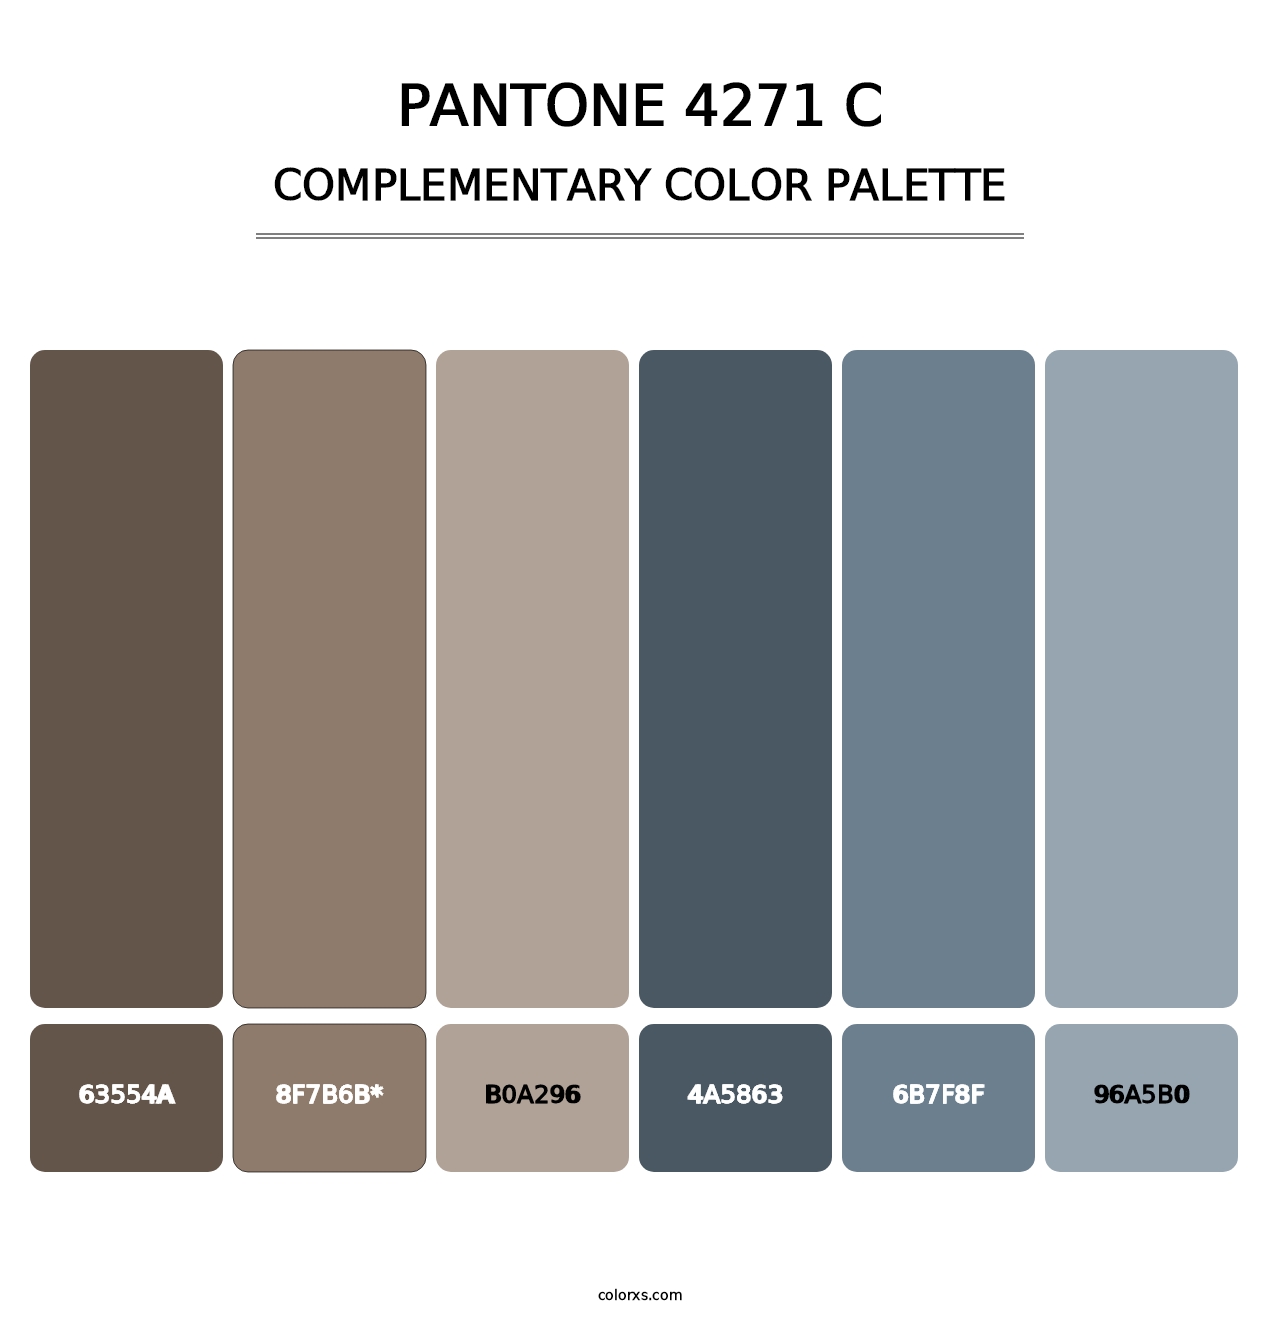 PANTONE 4271 C - Complementary Color Palette